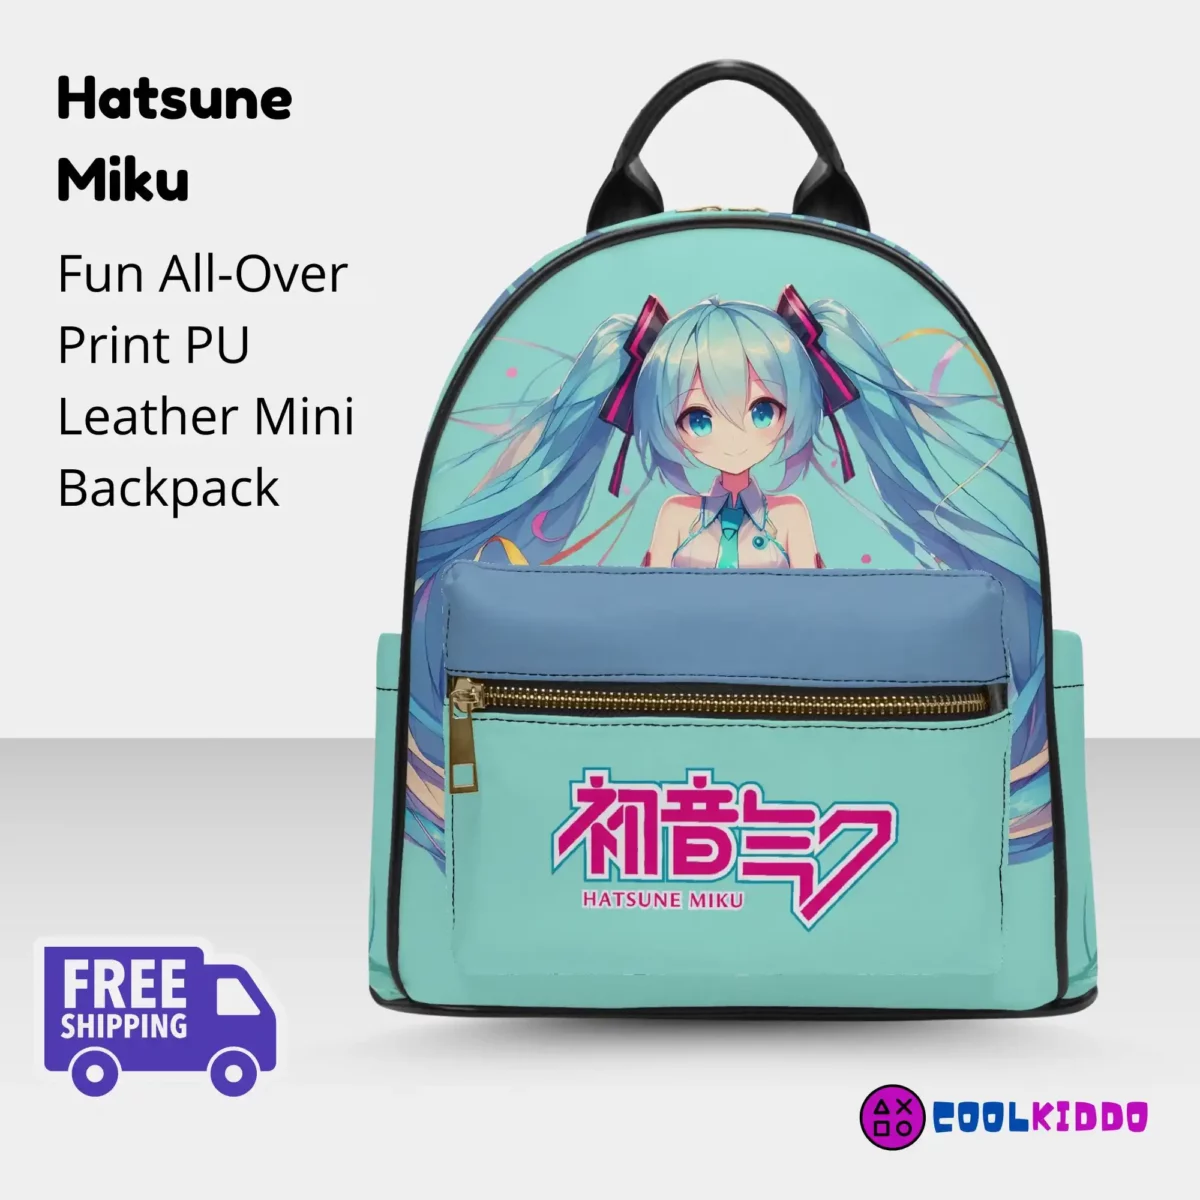 Hatsune Miku Anime Style Mini Leather Backpack For Girls/Youth | School Book Bag Cool Kiddo 10